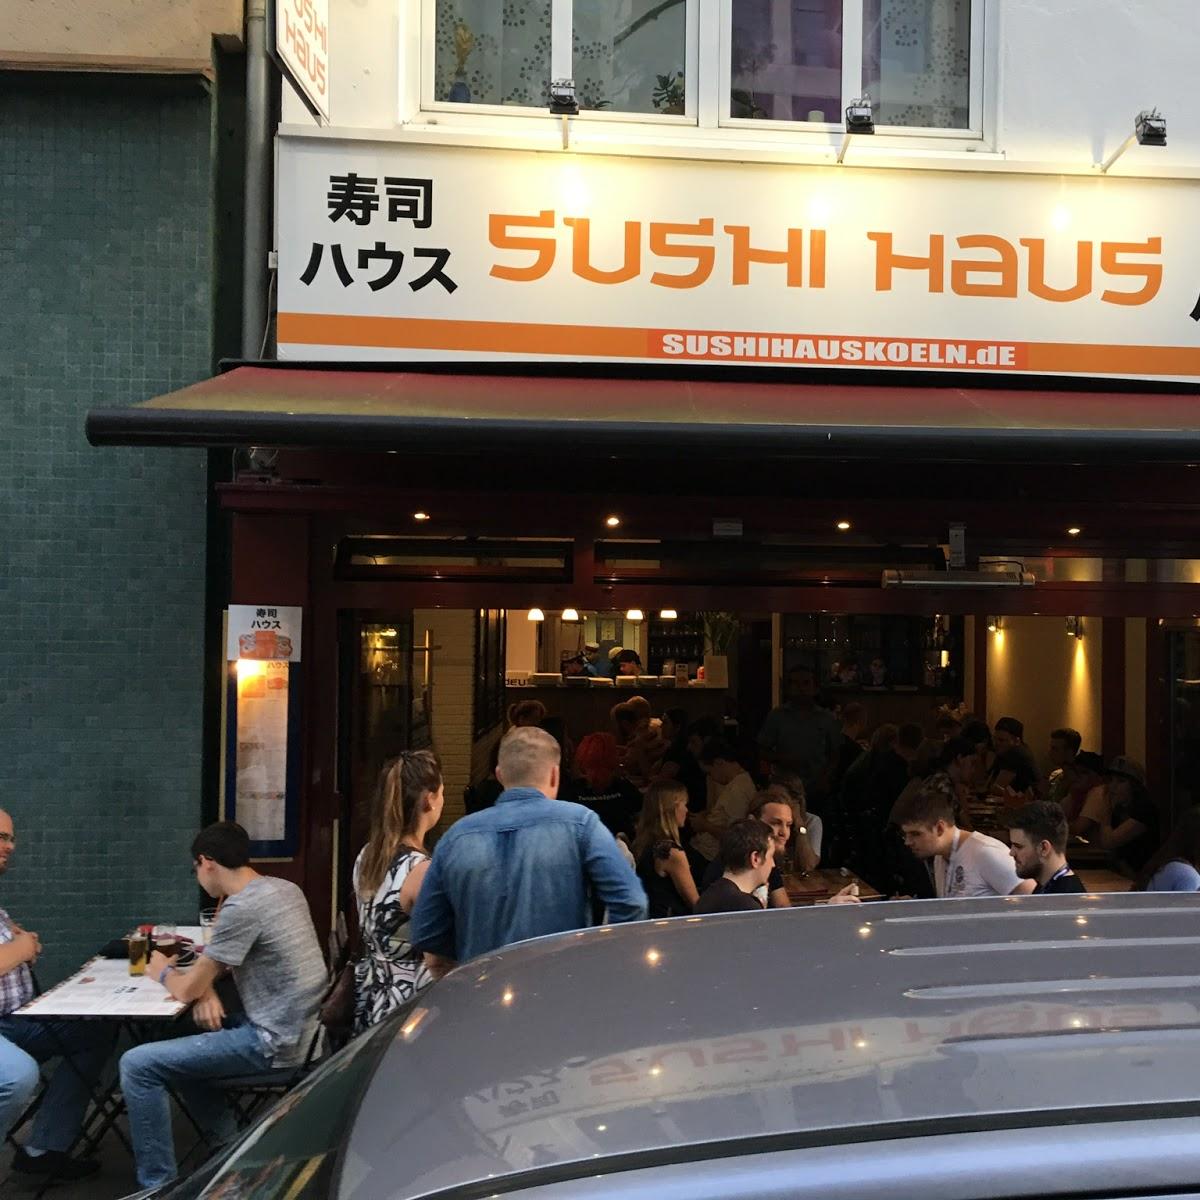 Restaurant "Sushi Haus" in Köln